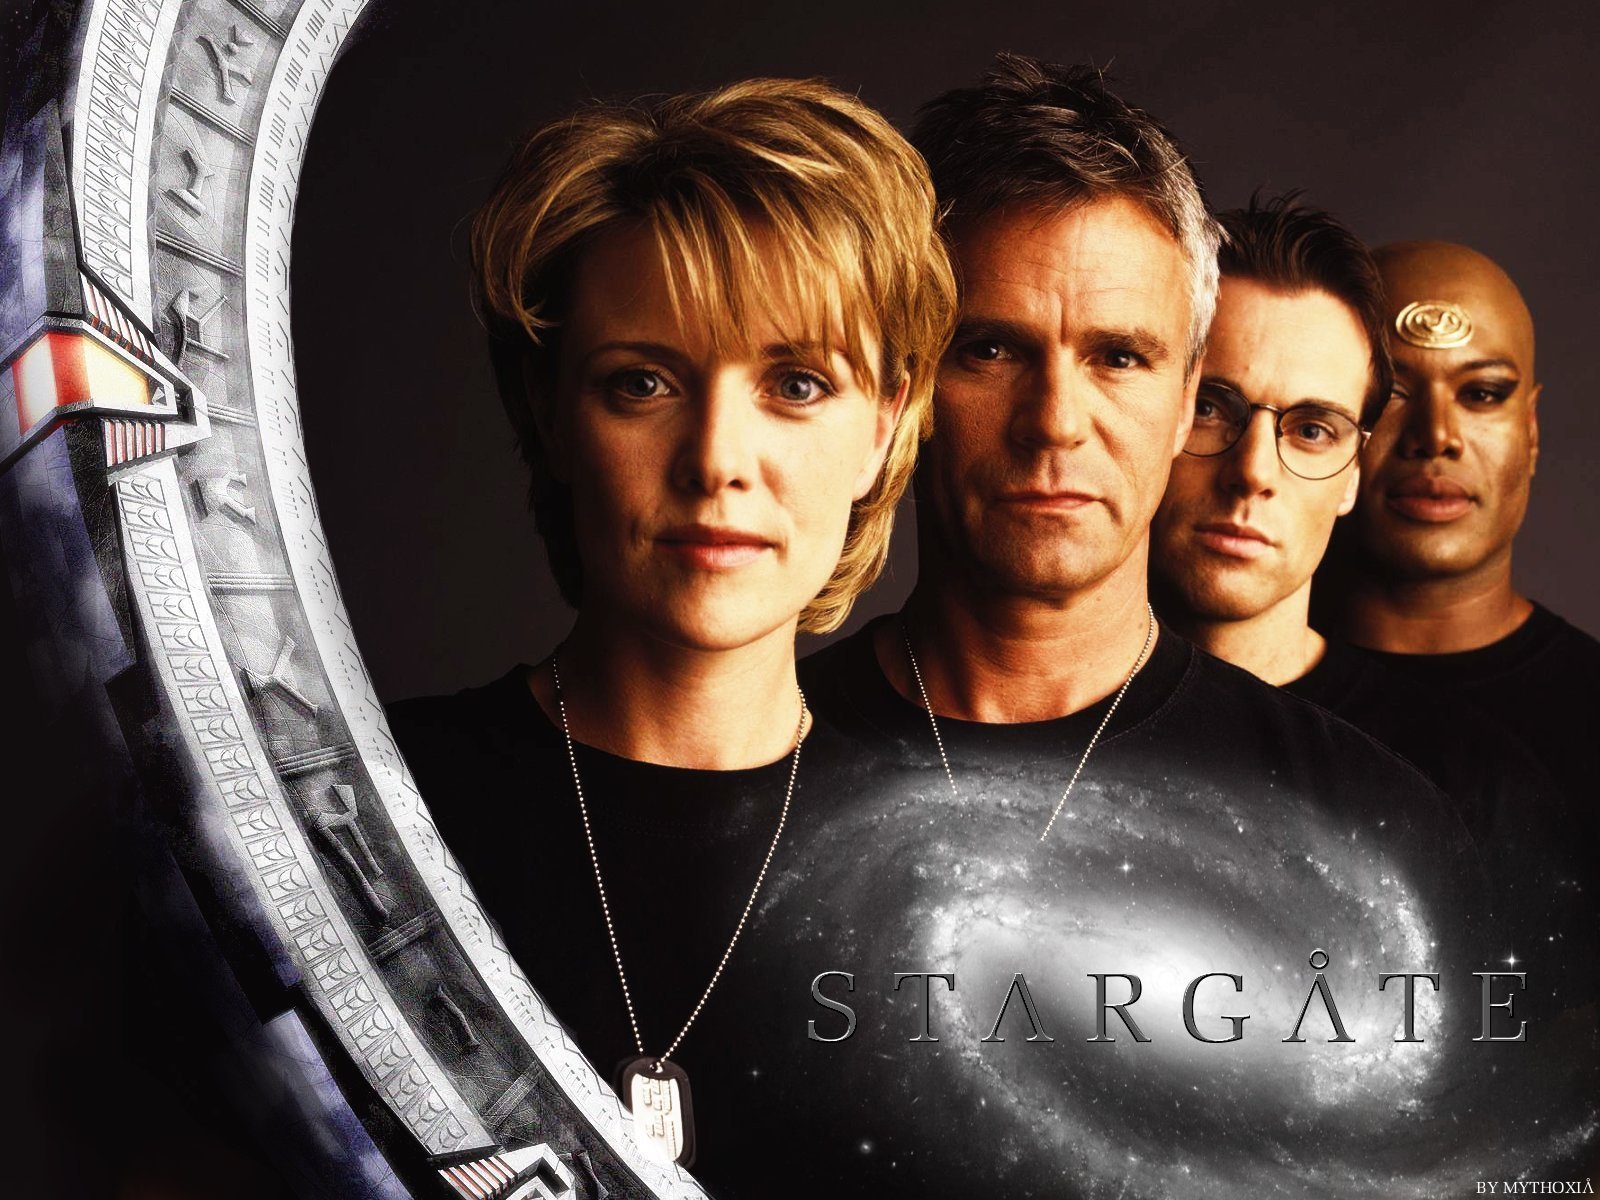 Sg1 - Stargate SG 1 Wallpaper 9102133 - Fanpop